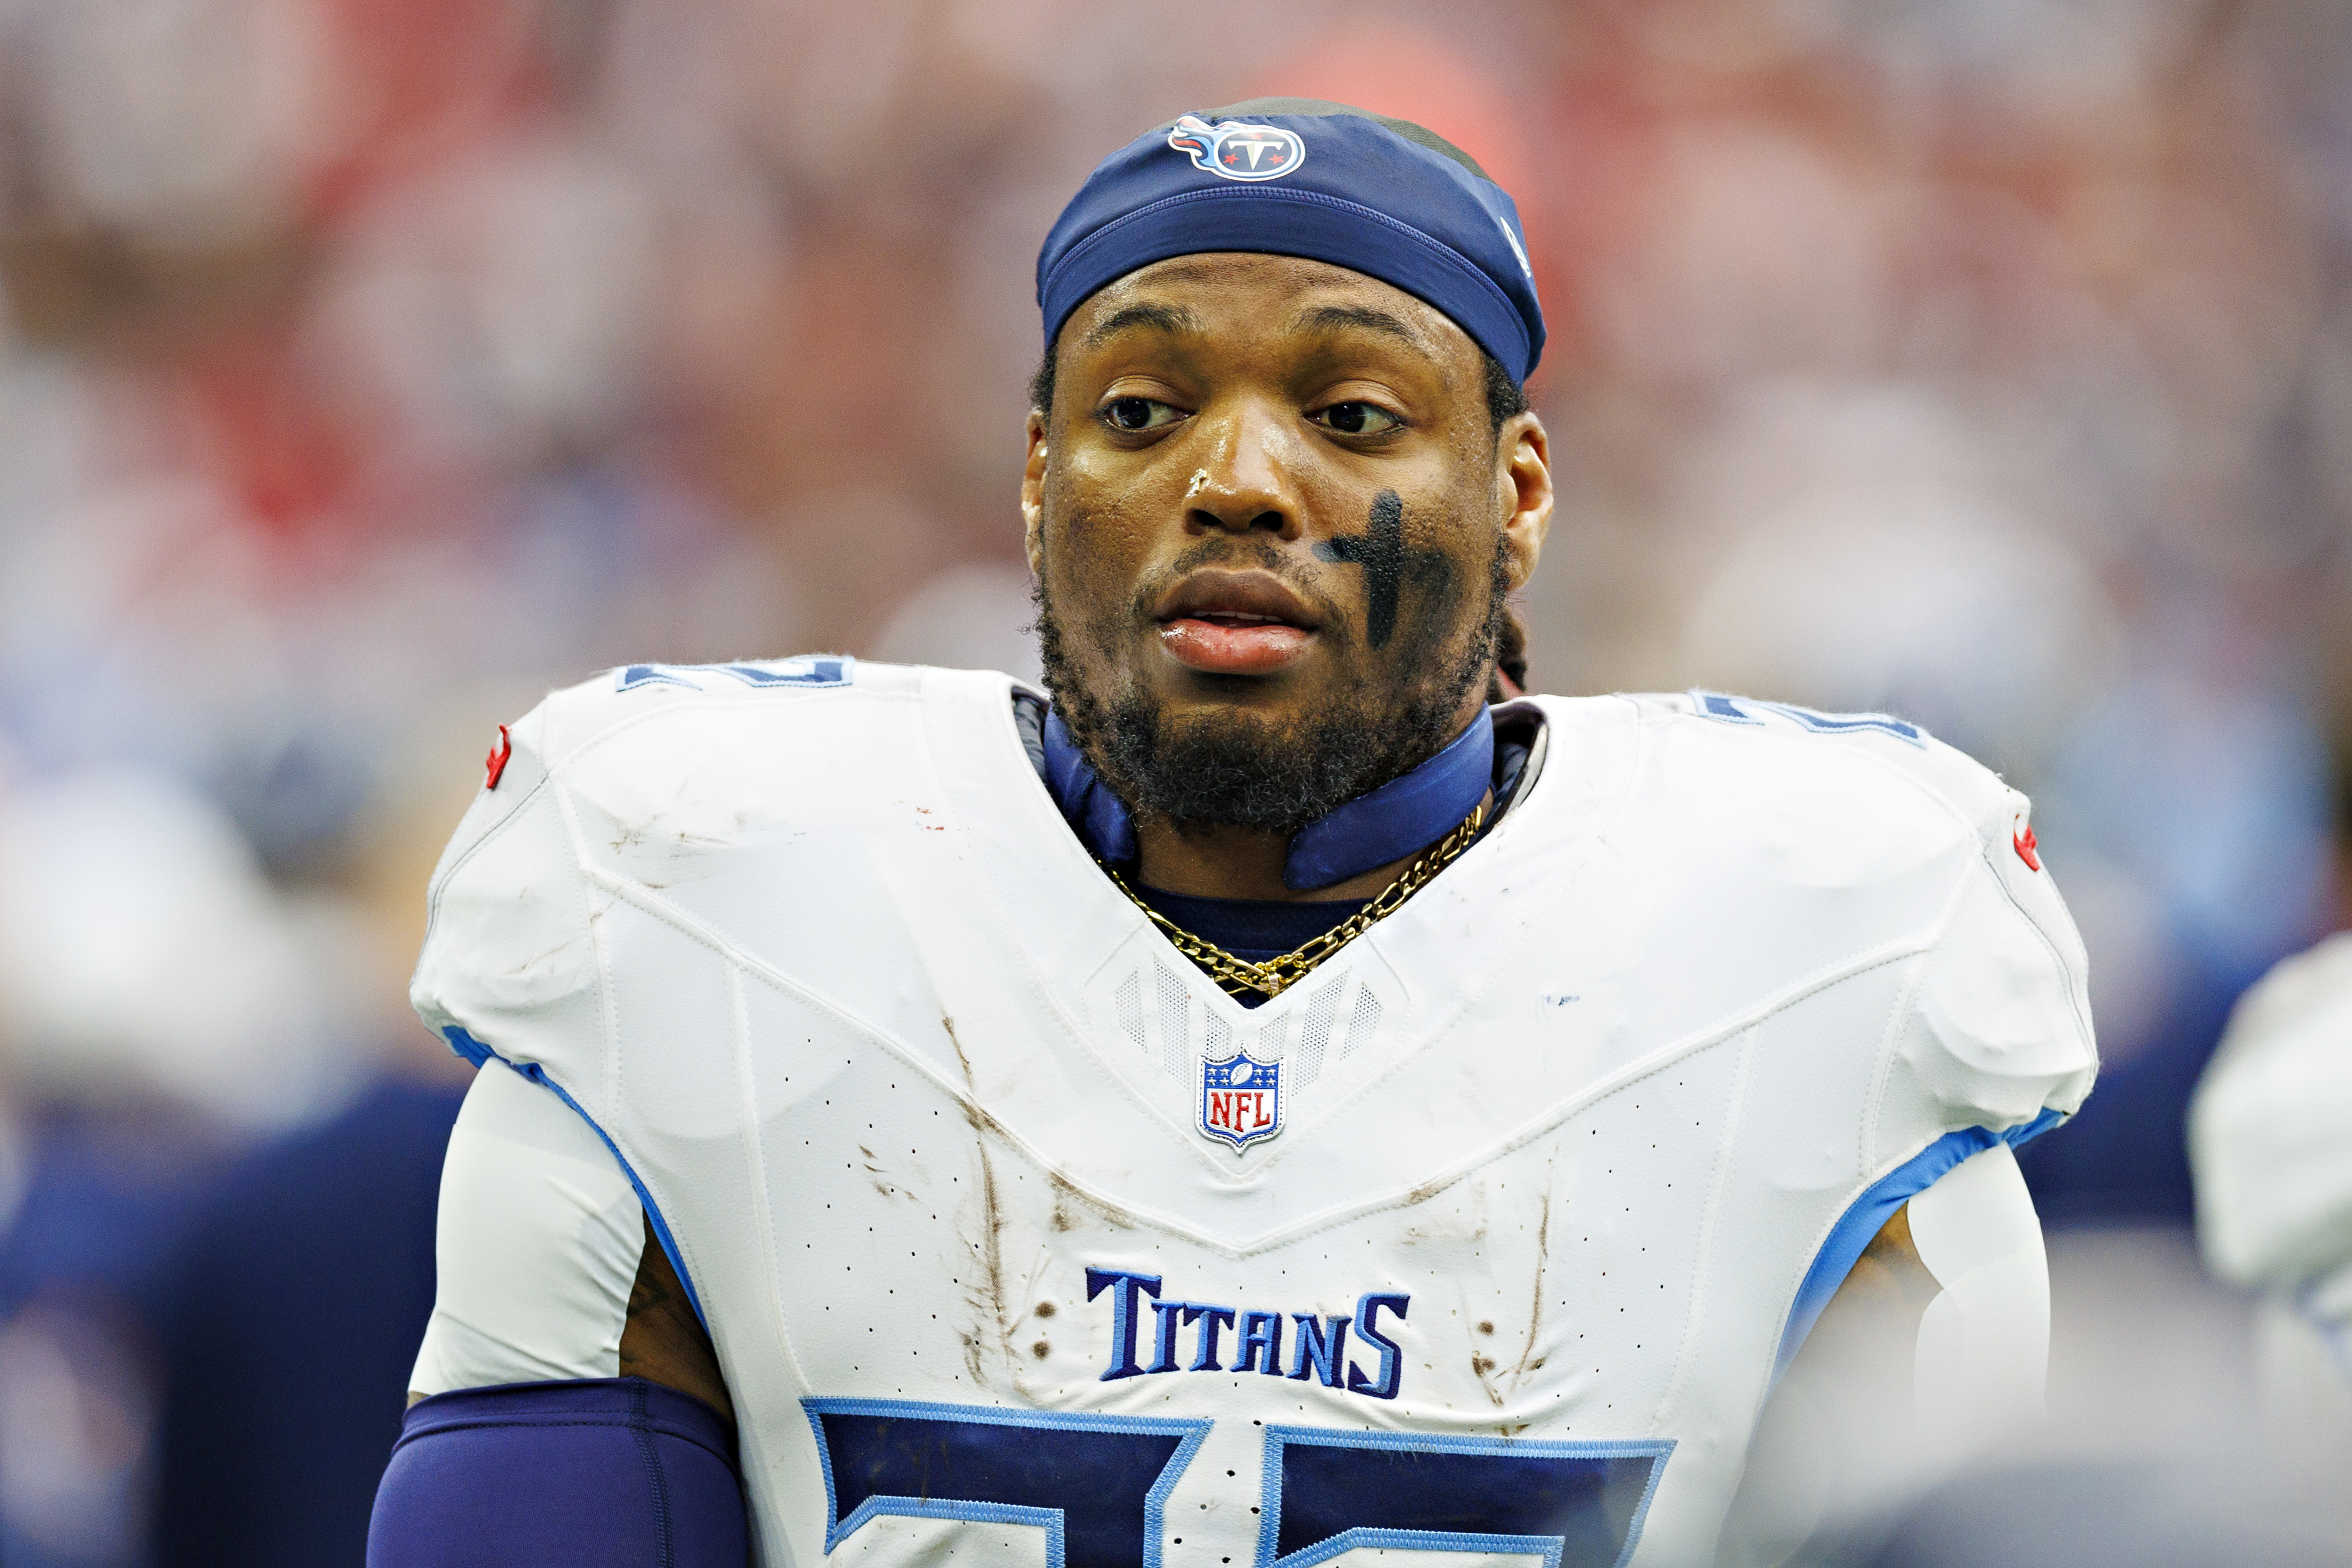 NFL player in Titans uniform, focused look, helmet with visor off-head, on field